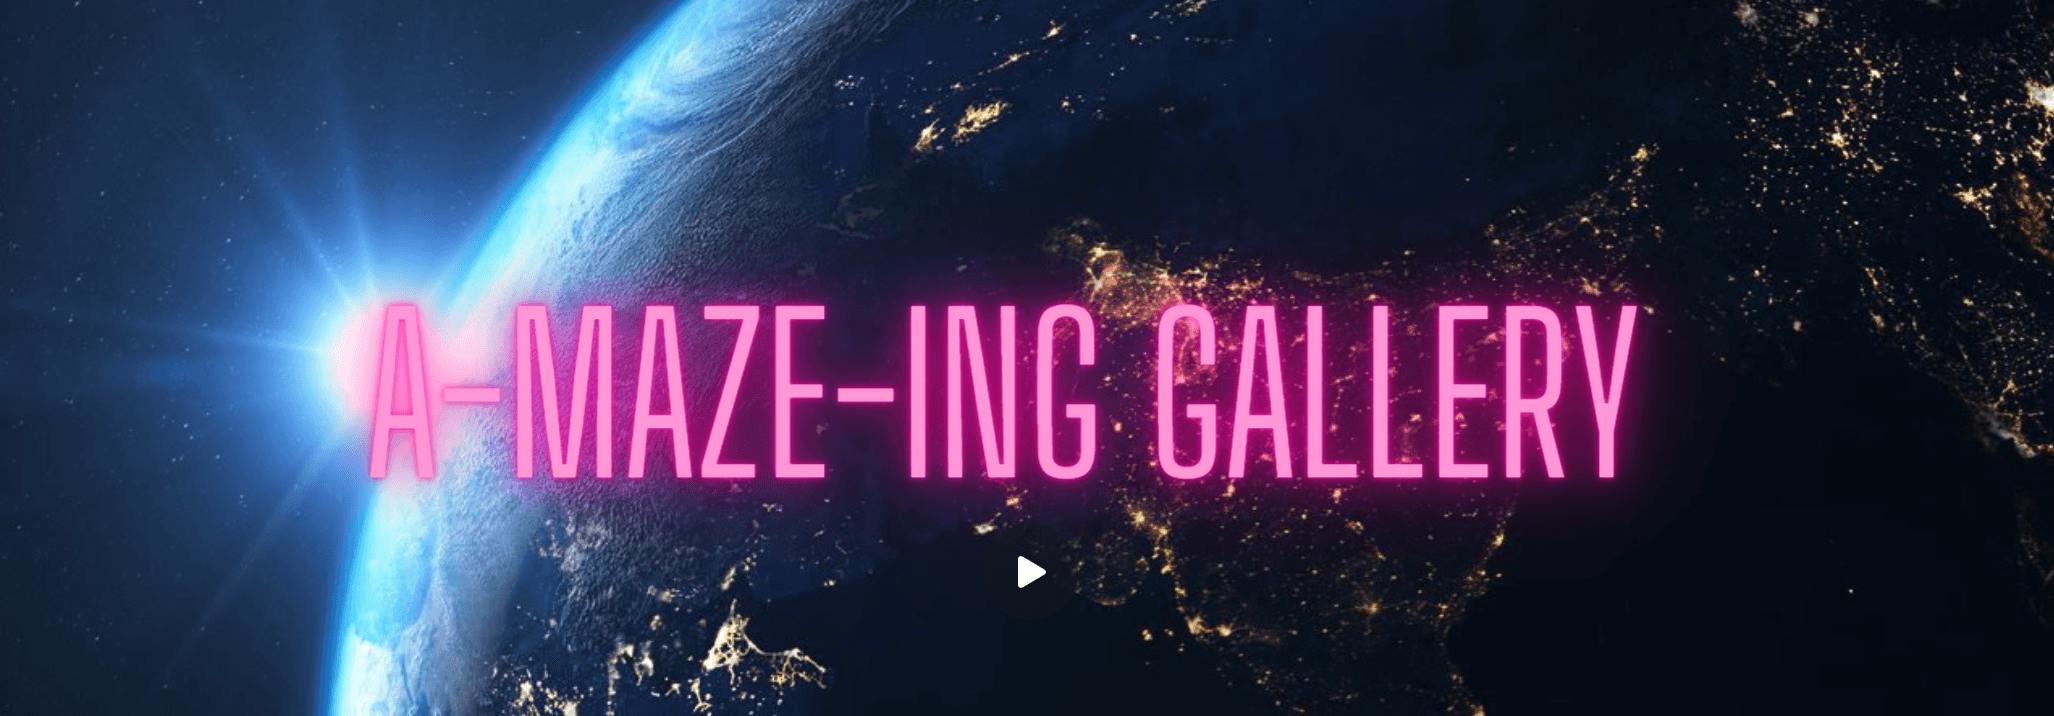 A-maze-ing-gallery banner